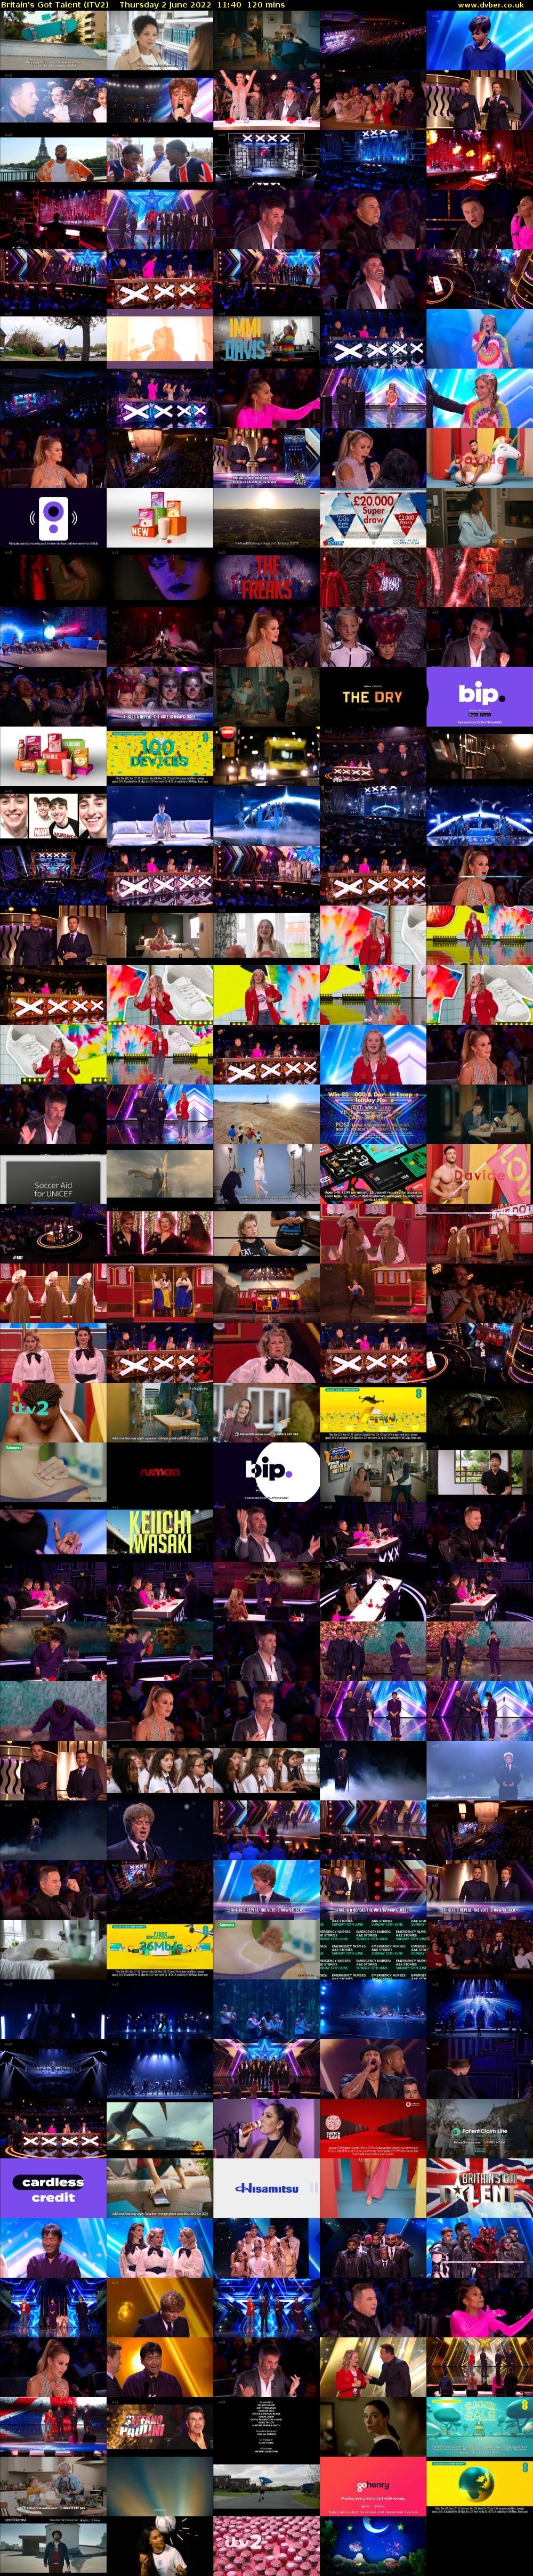 Britain's Got Talent (ITV2) Thursday 2 June 2022 11:40 - 13:40